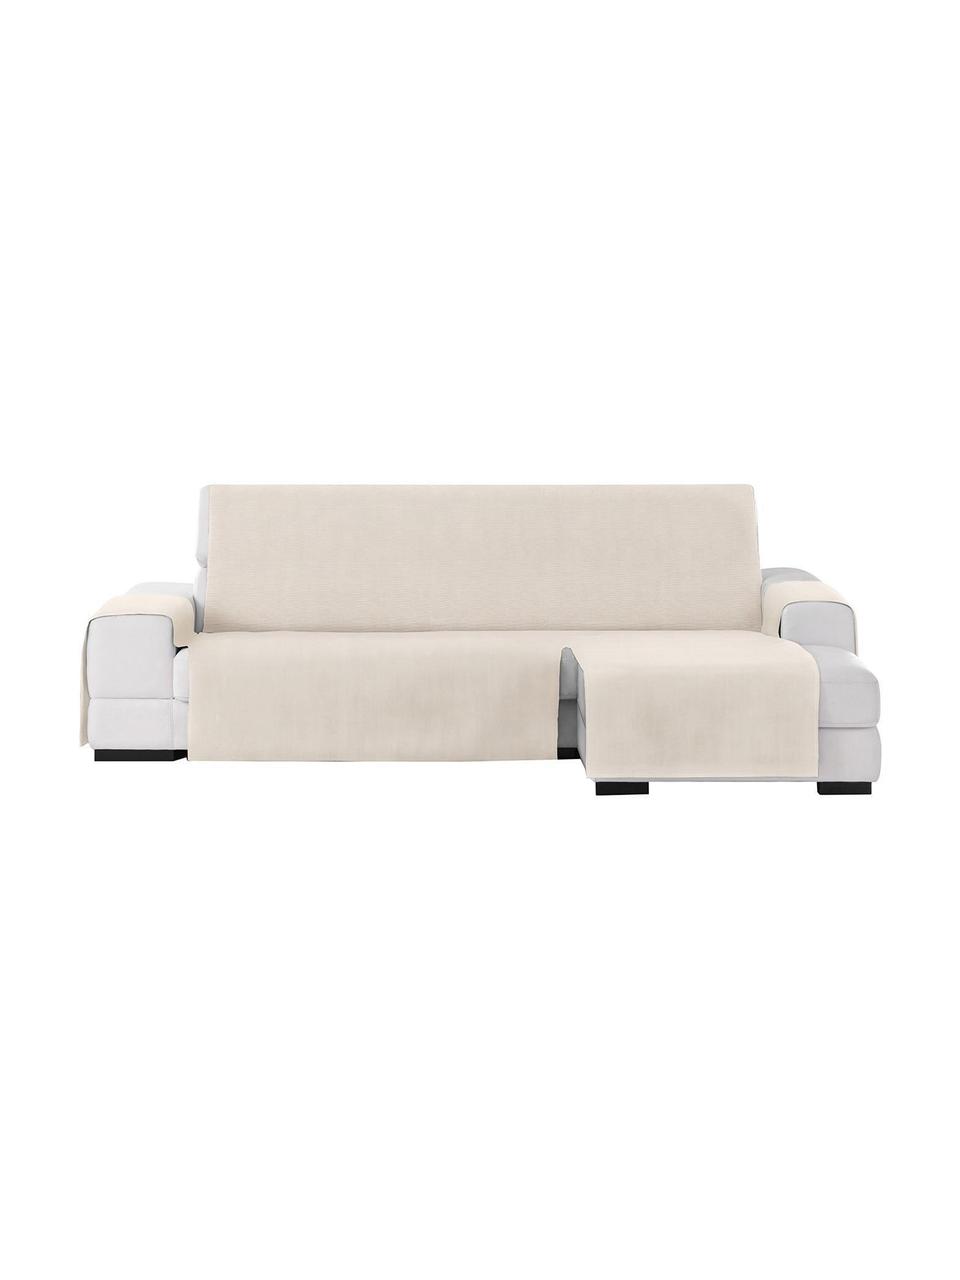 Copertura divano angolare Levante, 65% cotone, 35% poliestere, Beige, Larg. 150 x Lung. 240 cm, chaise-longue a destra